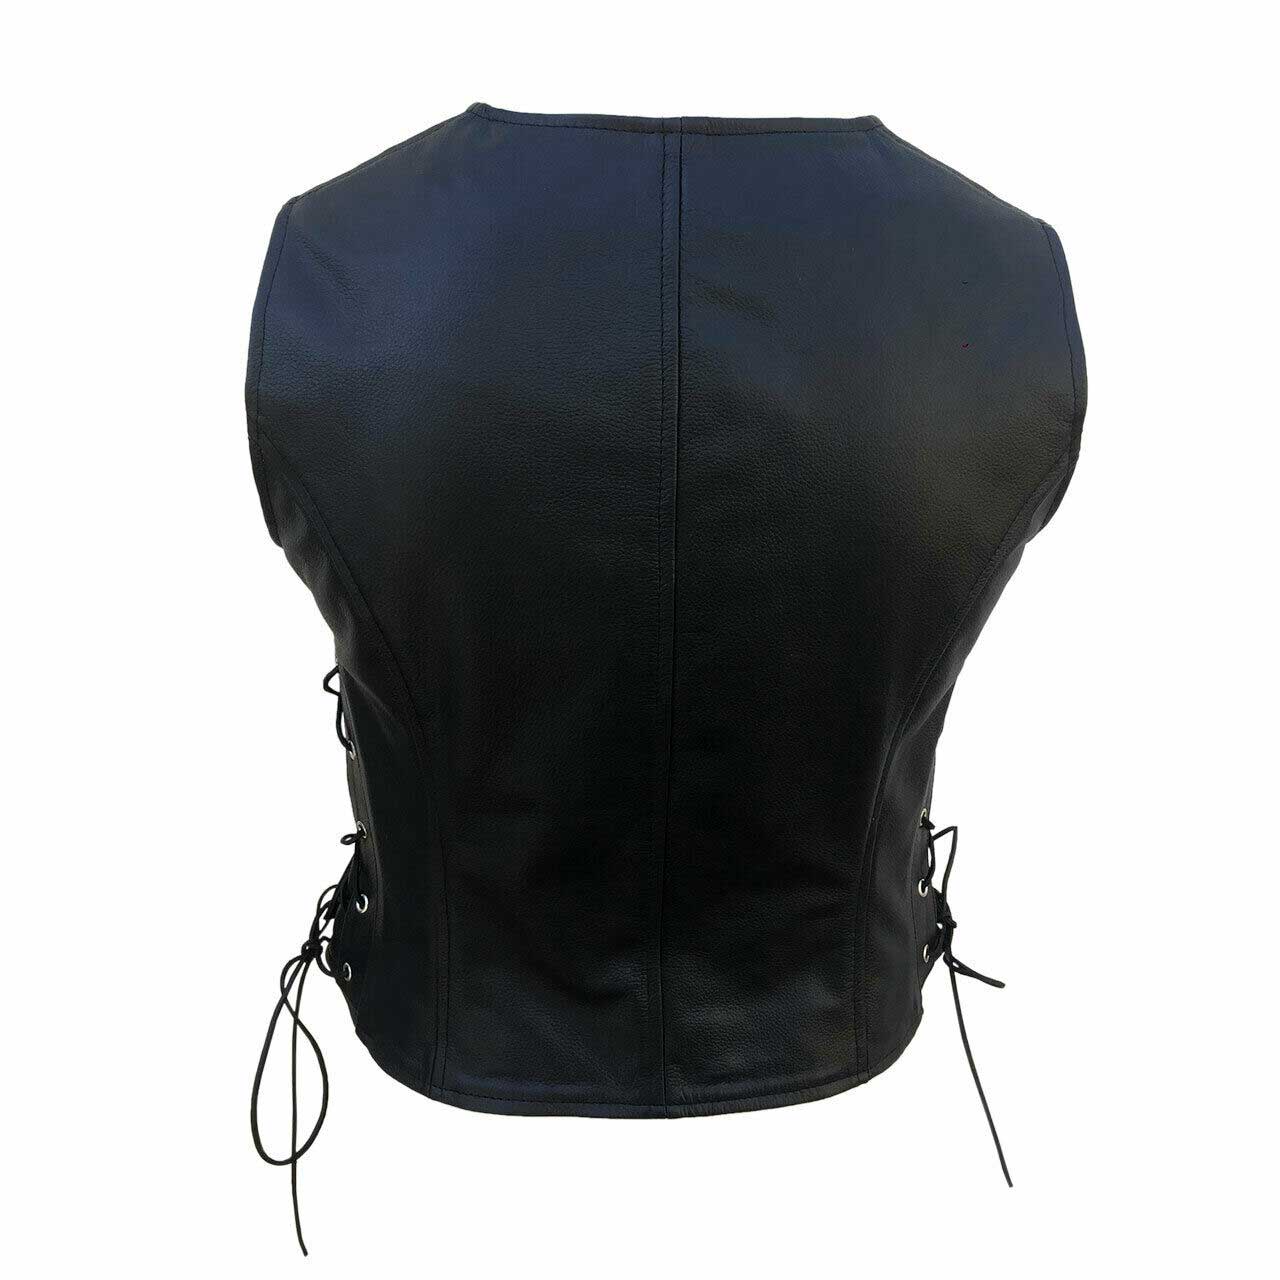 Women’s Black Leather Biker Vest